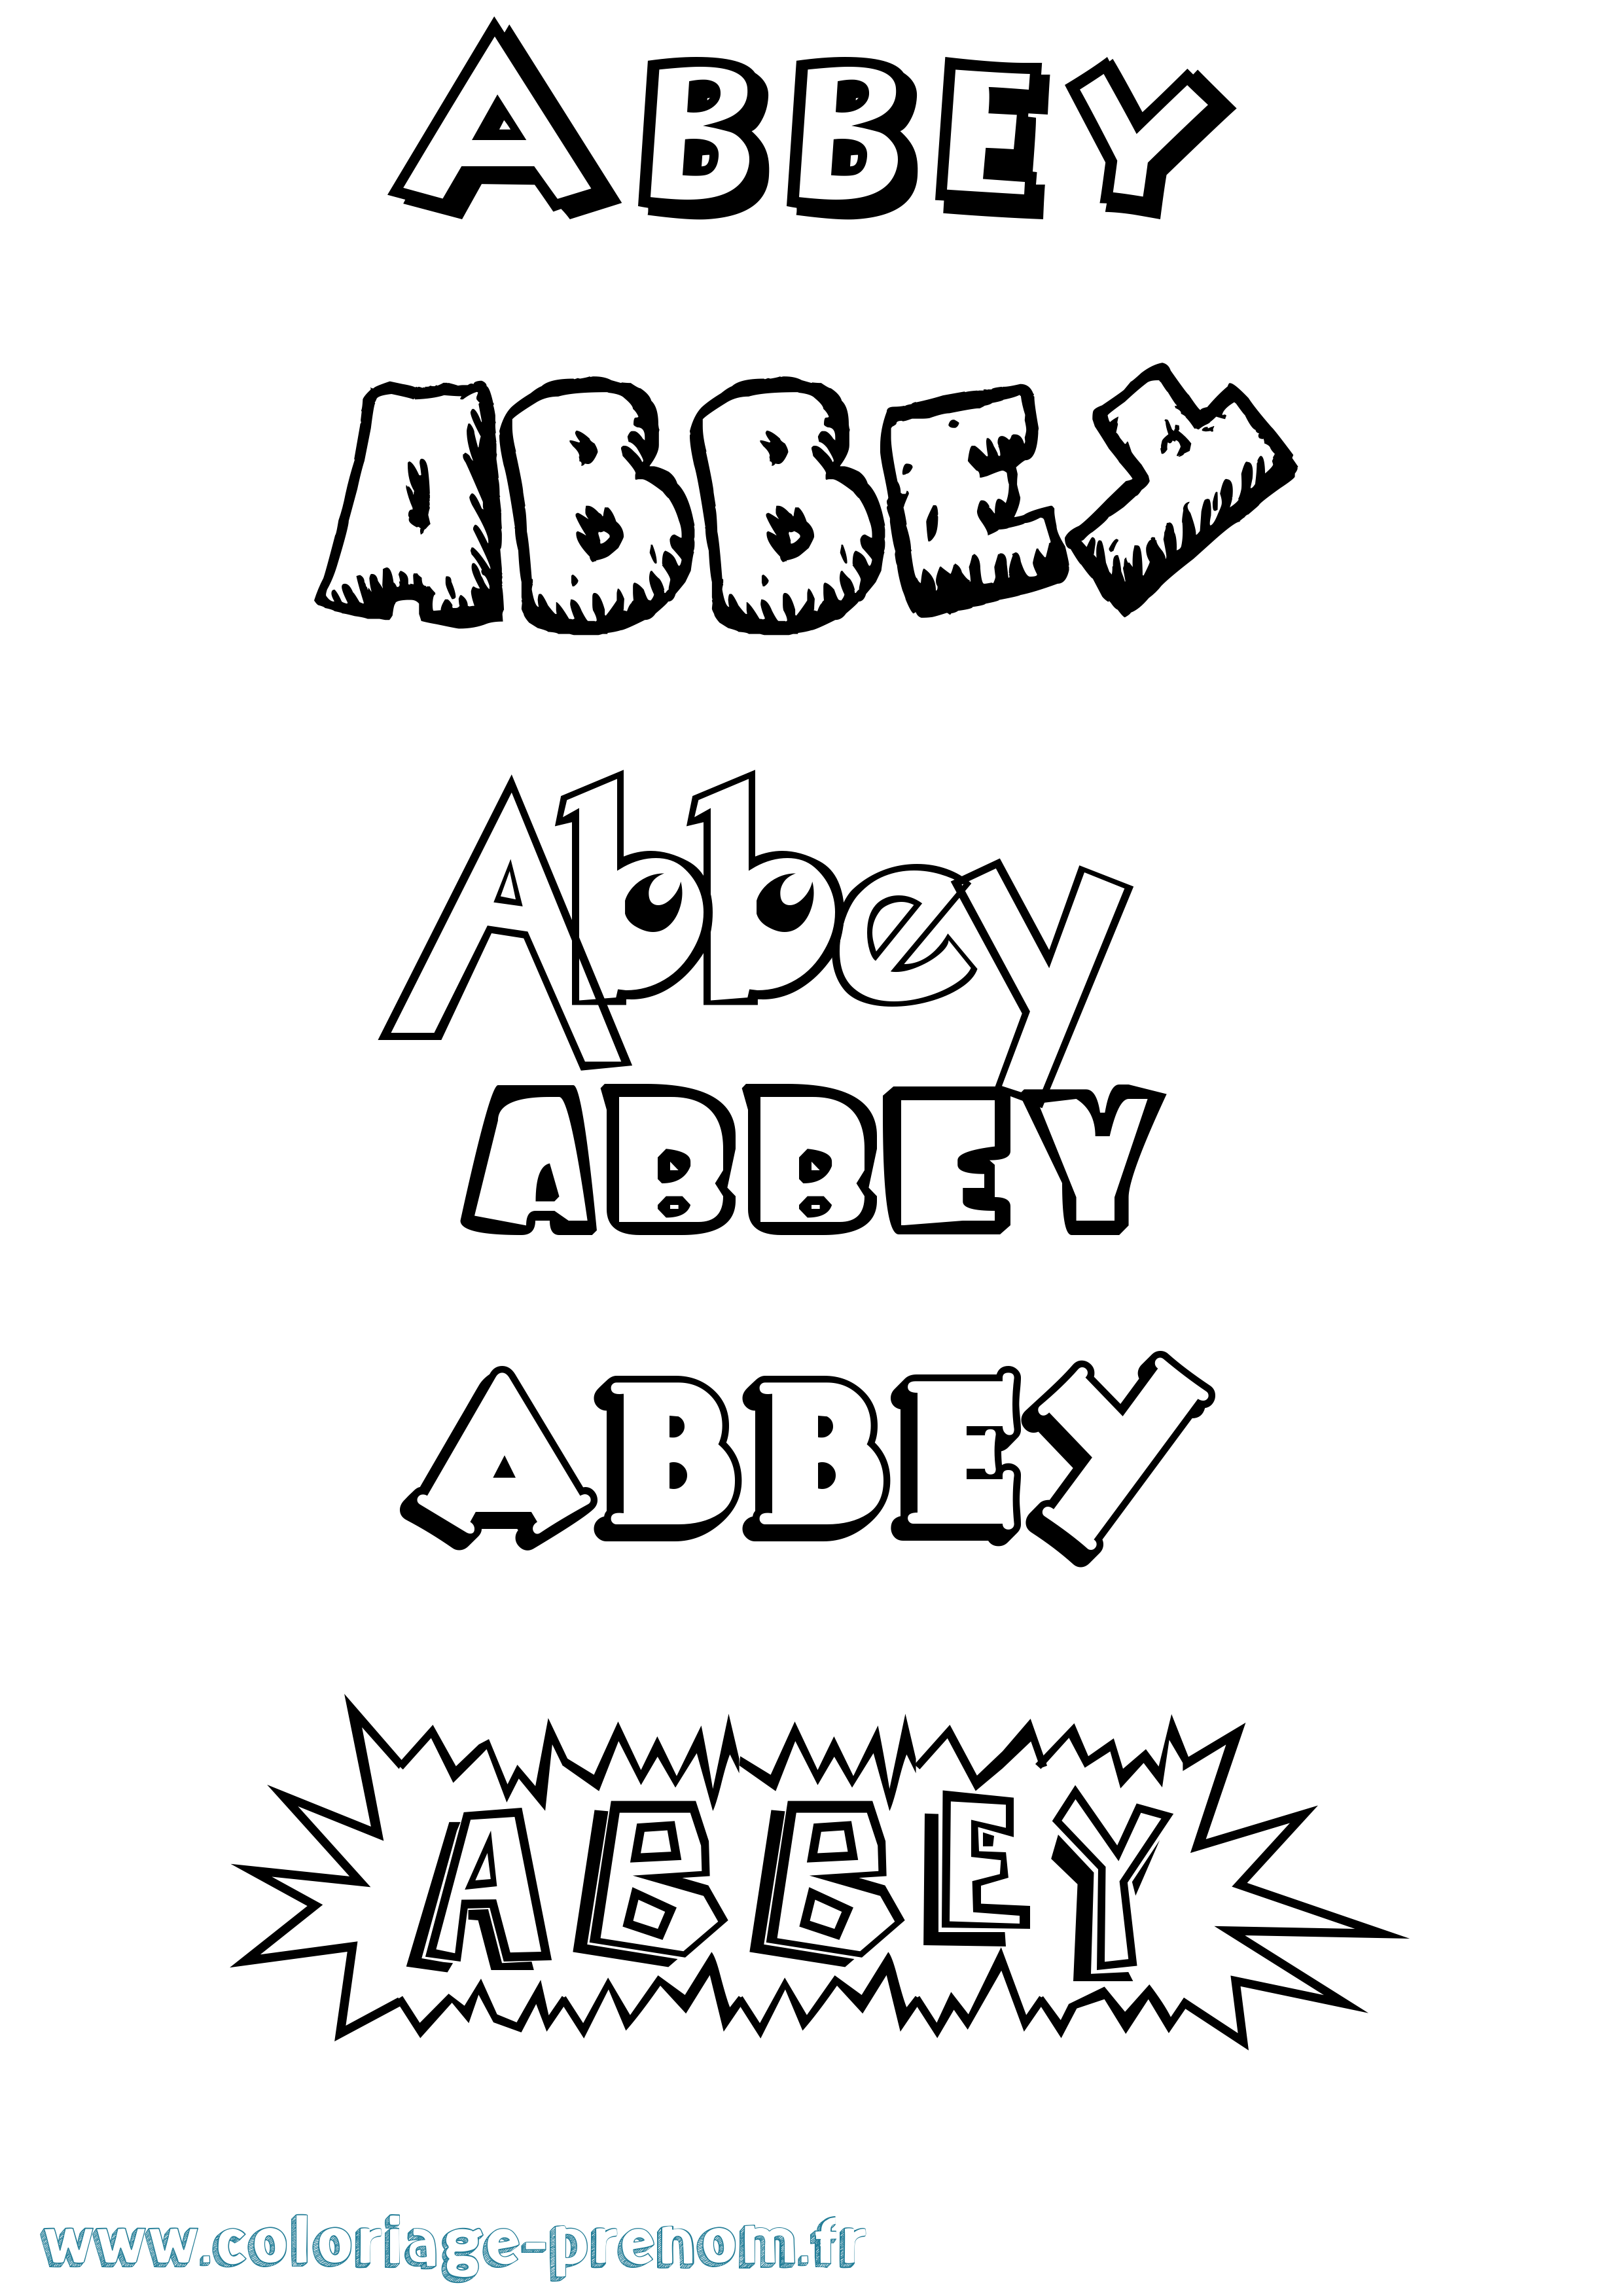 Coloriage prénom Abbey Dessin Animé